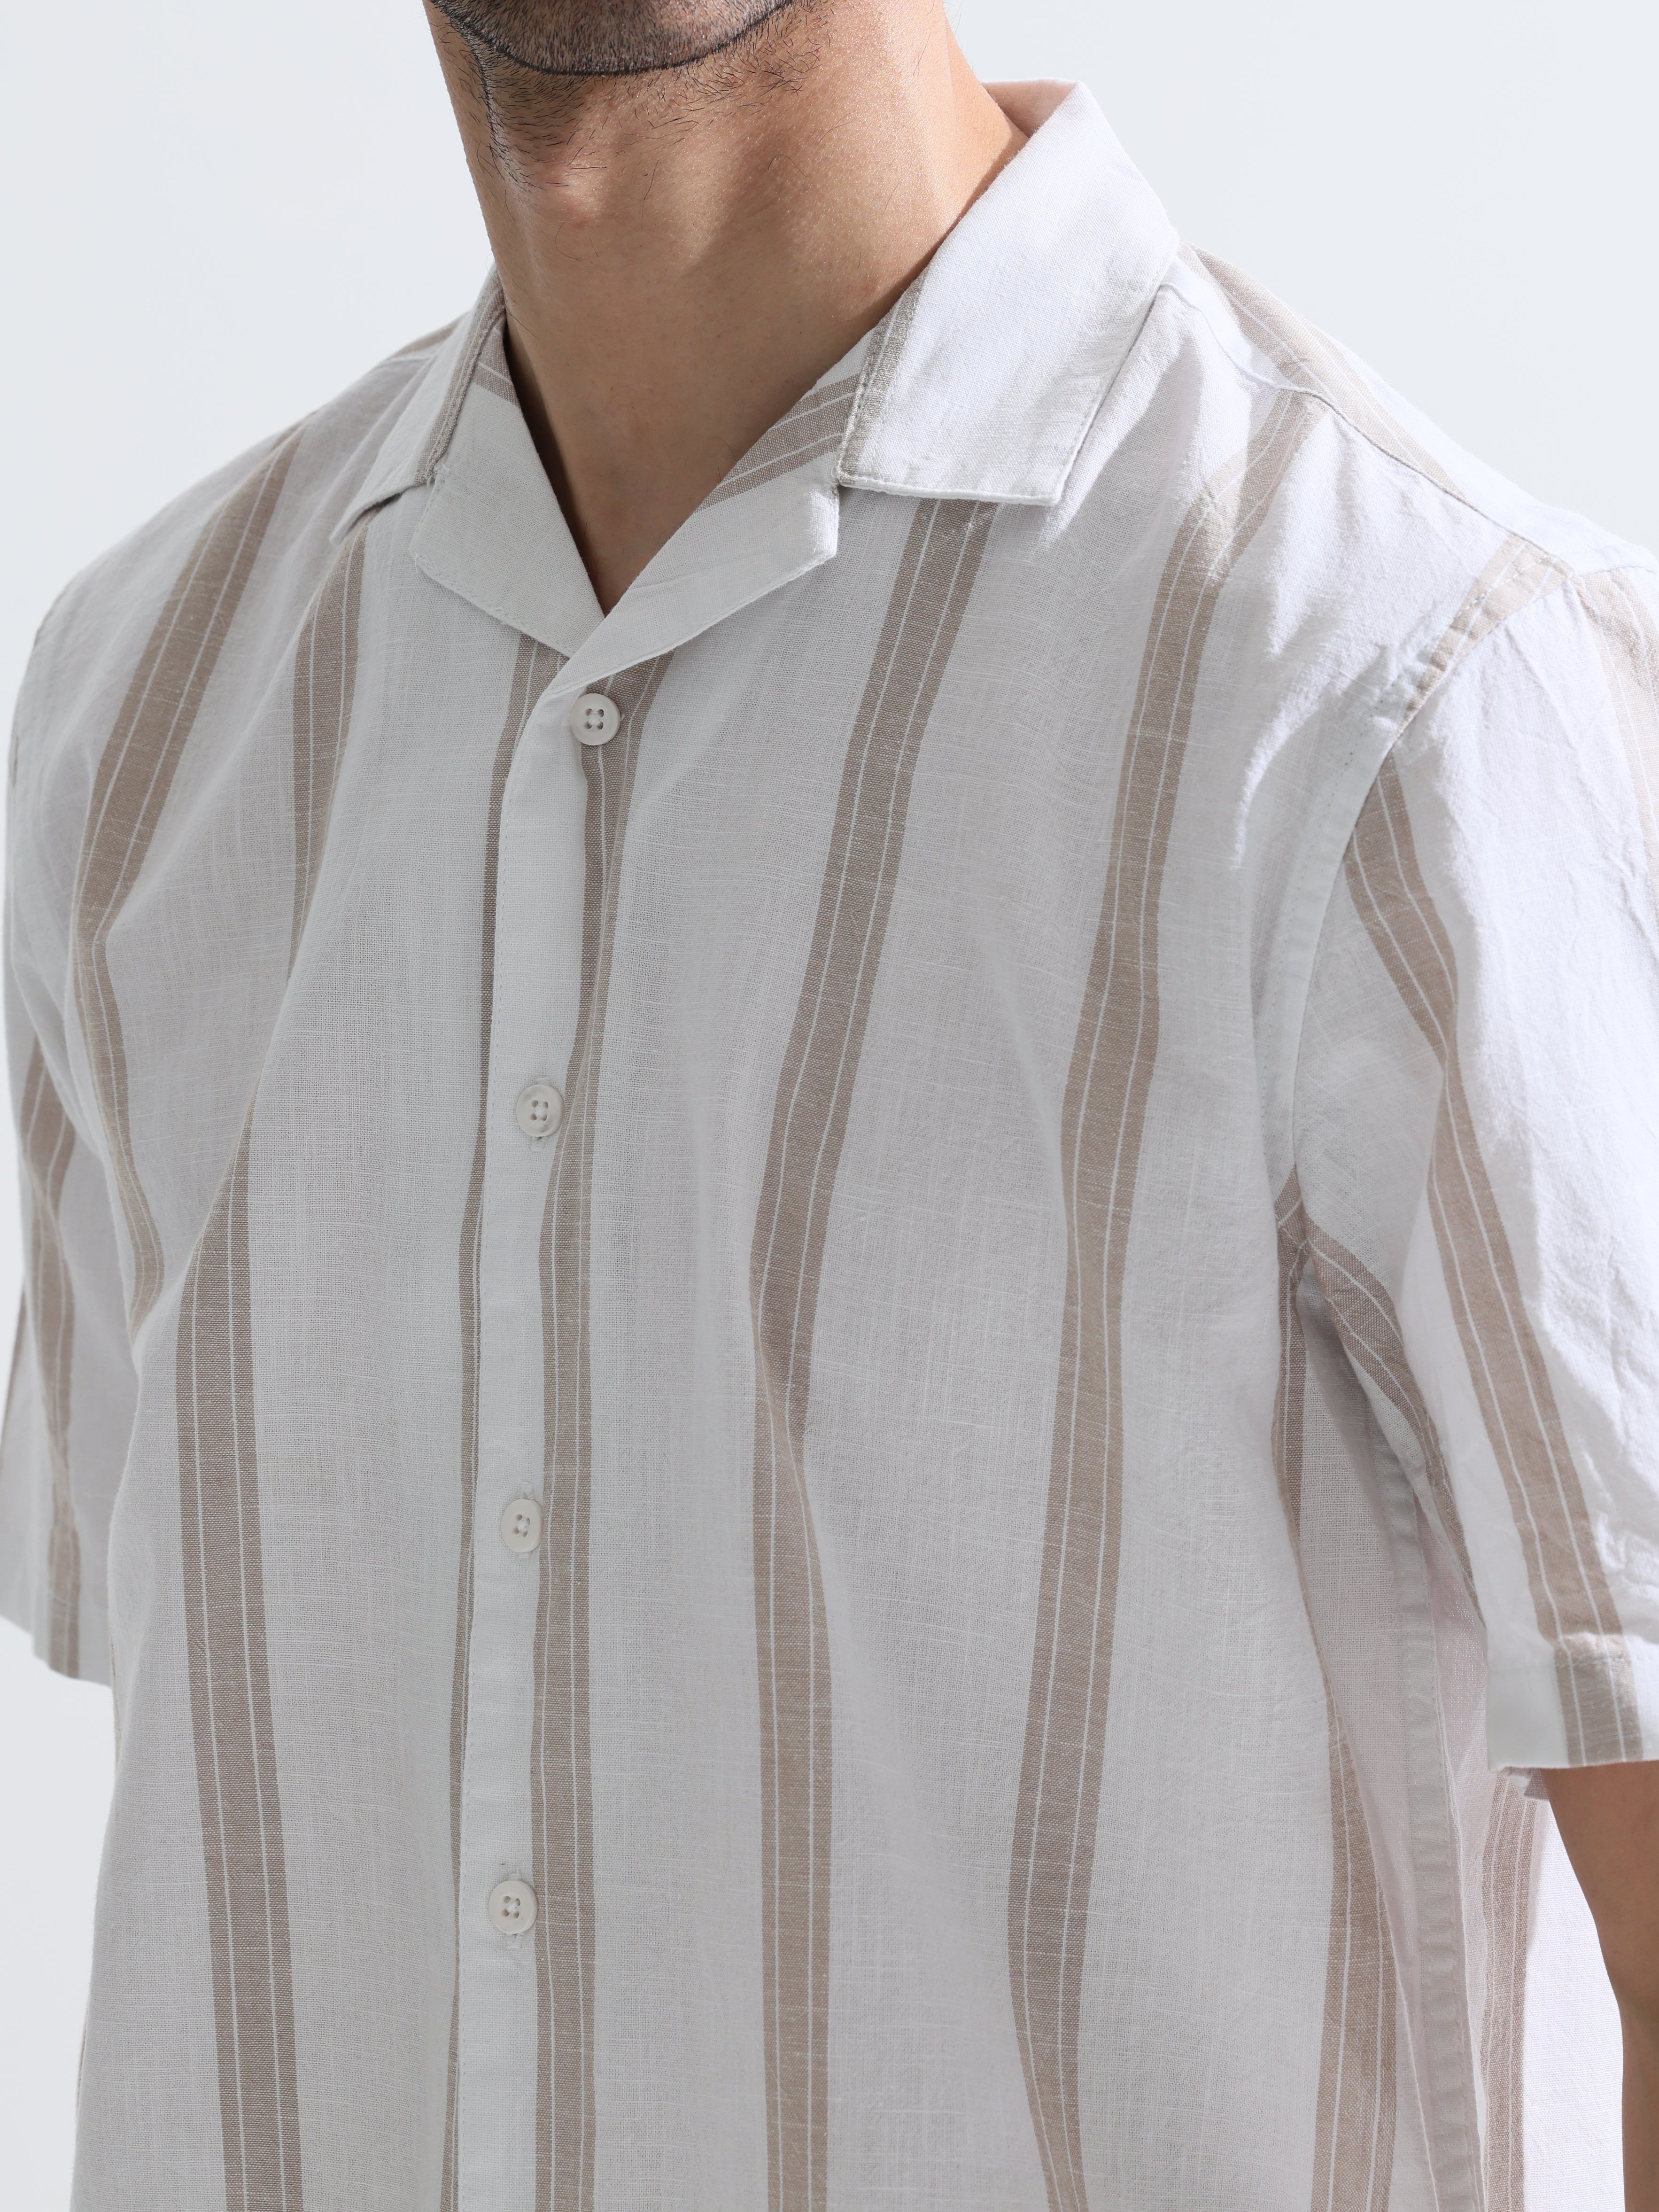 Pastel White Stripe shirts - Address pro